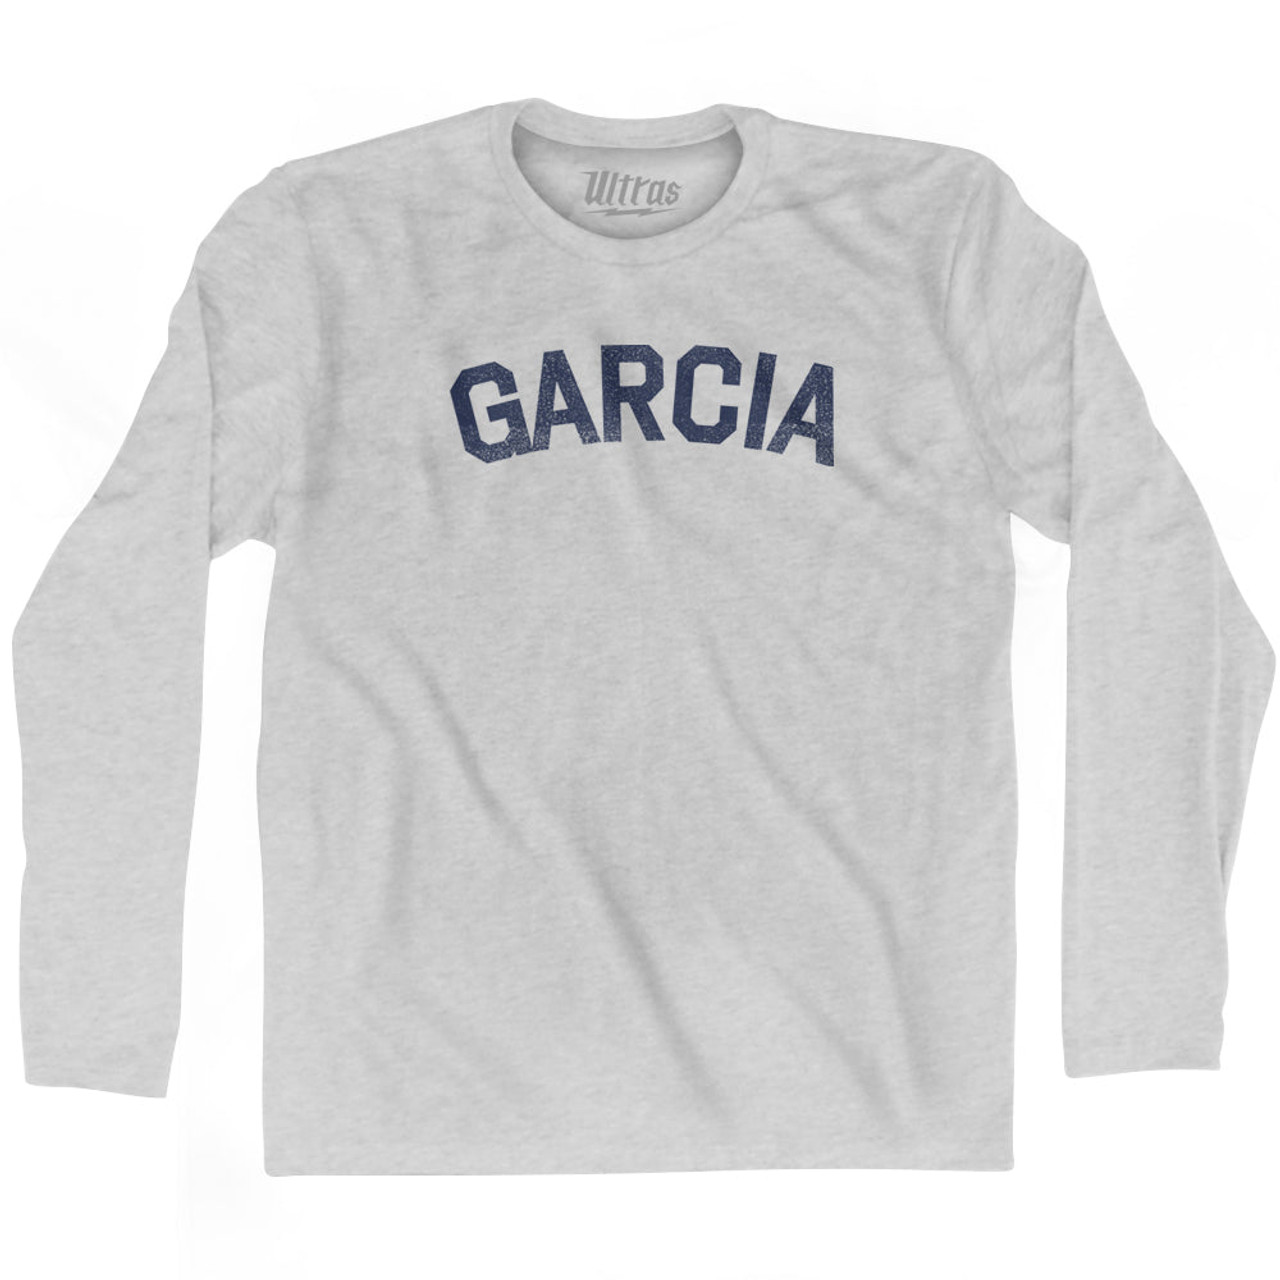 GARCIA Adult Cotton Long Sleeve T-shirt - Grey Heather